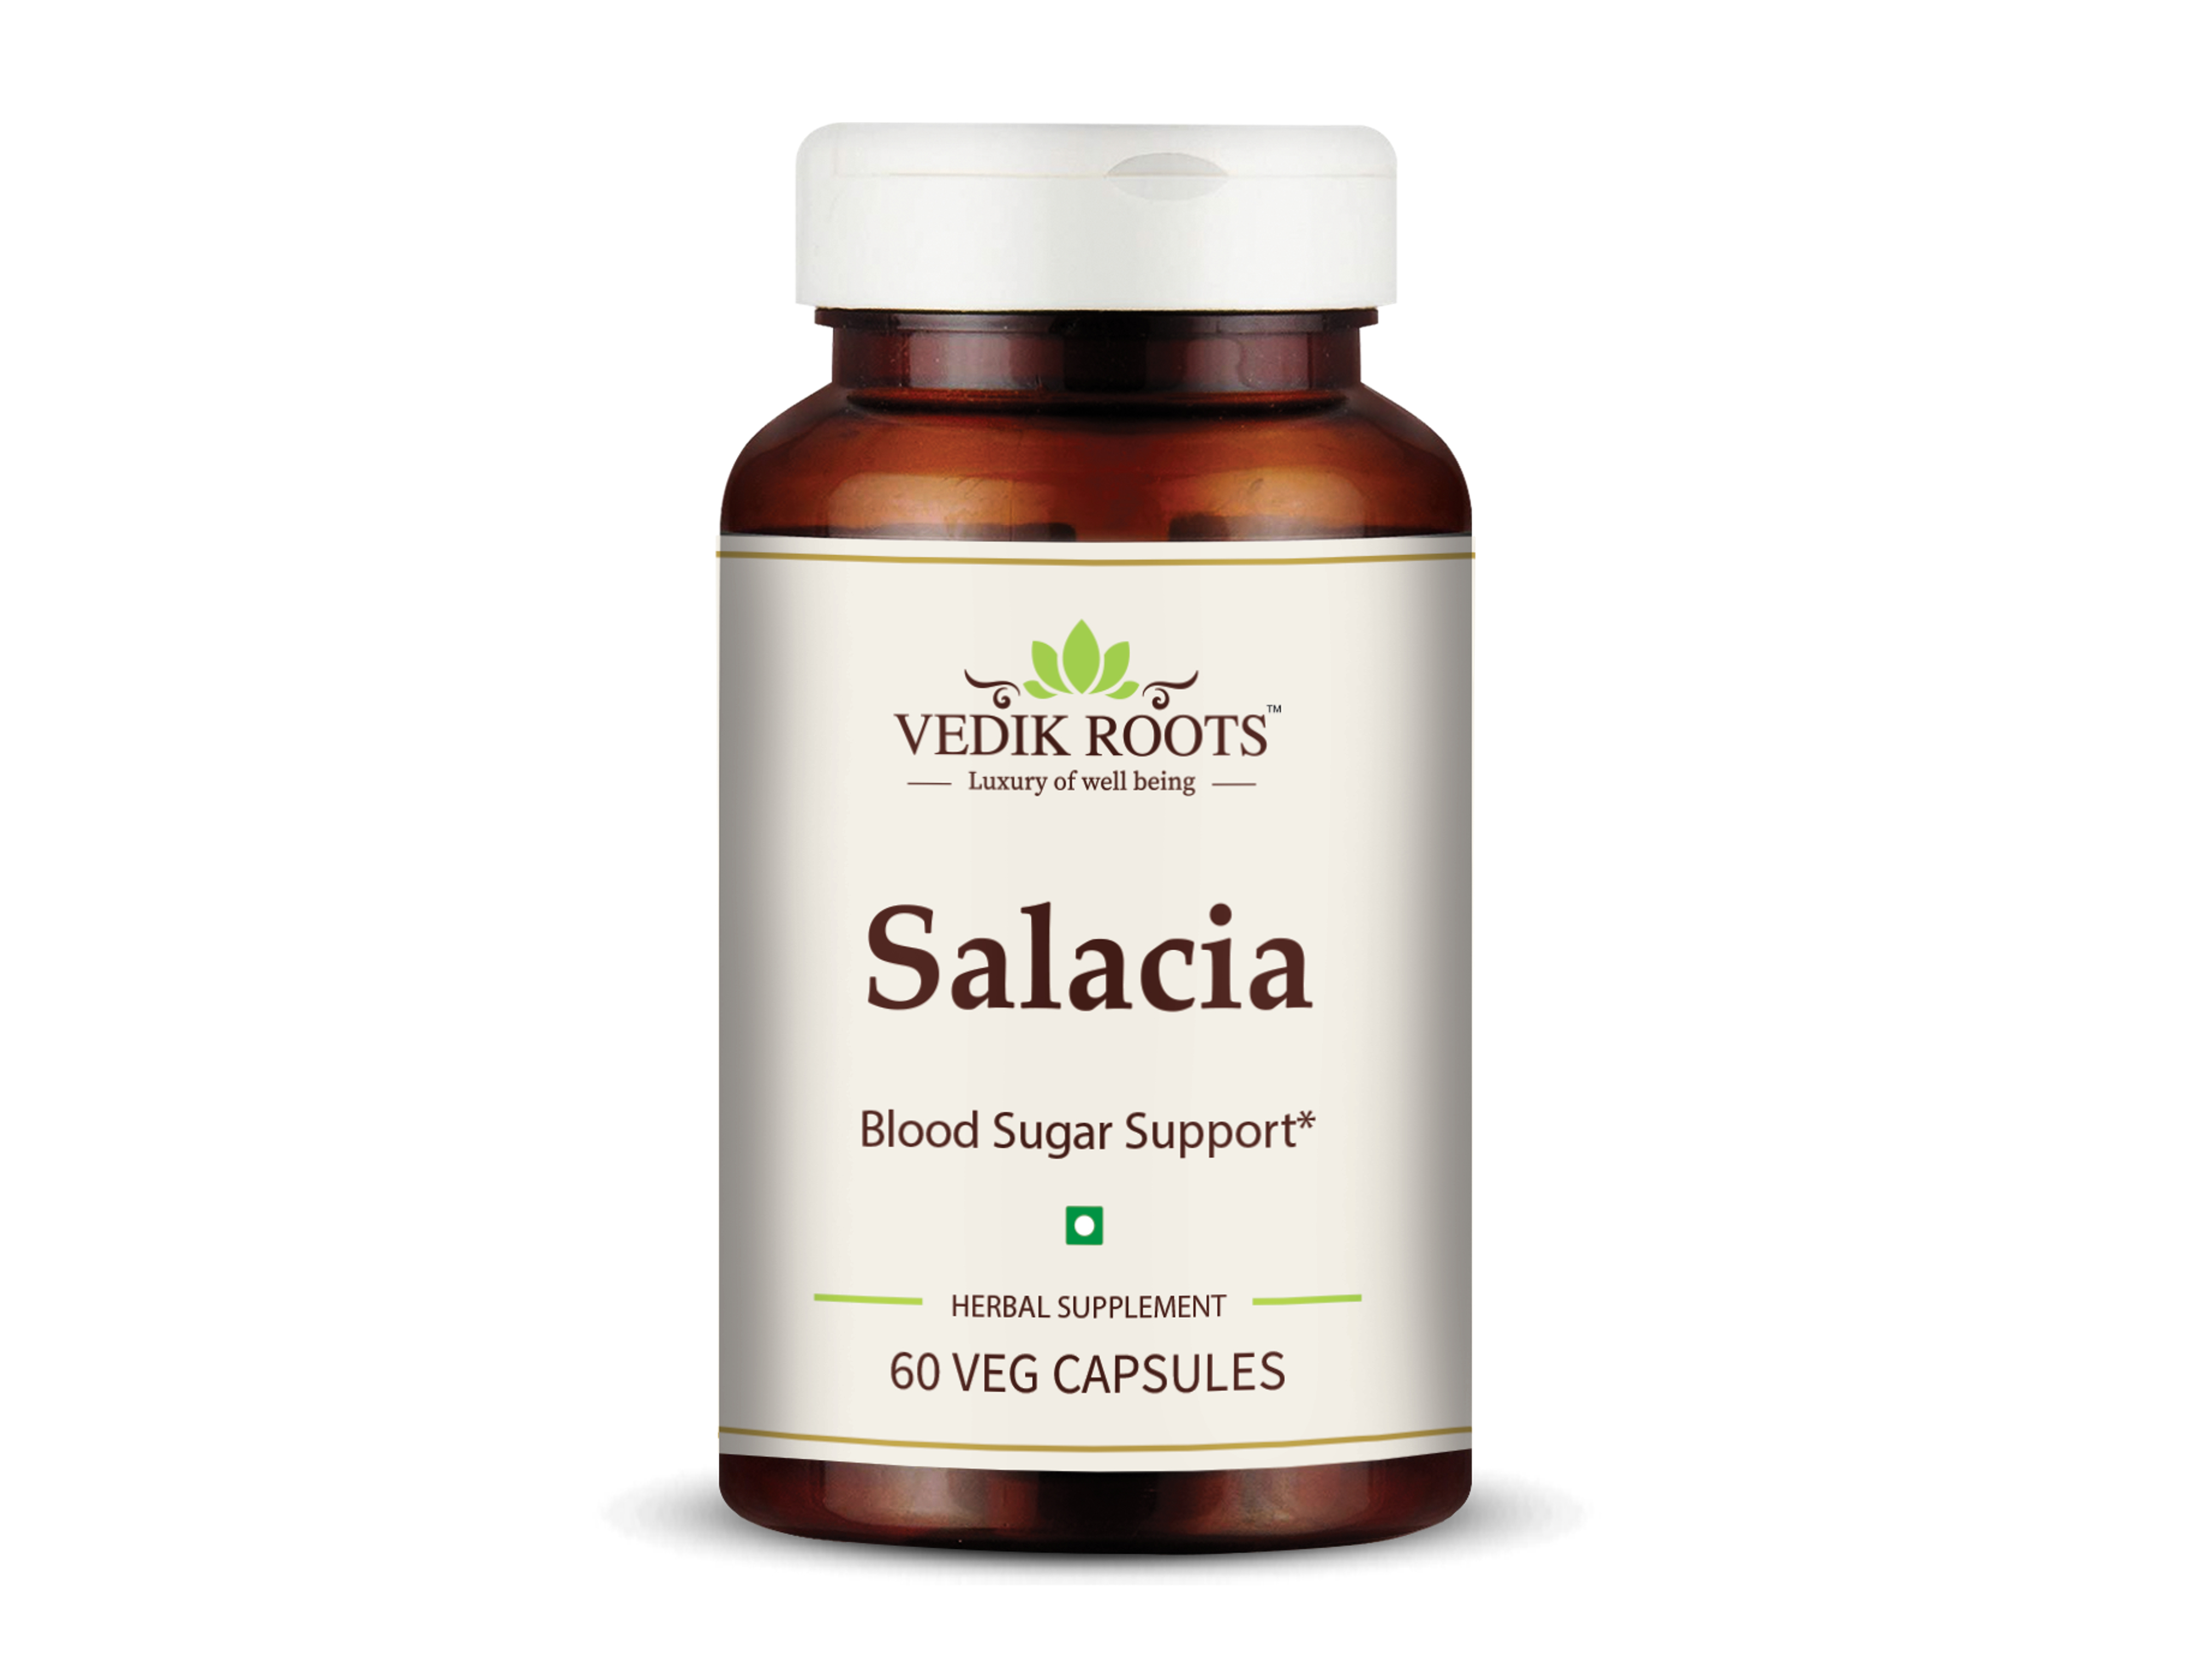 Buy Vedikroots Salacia Capsules at Best Price Online